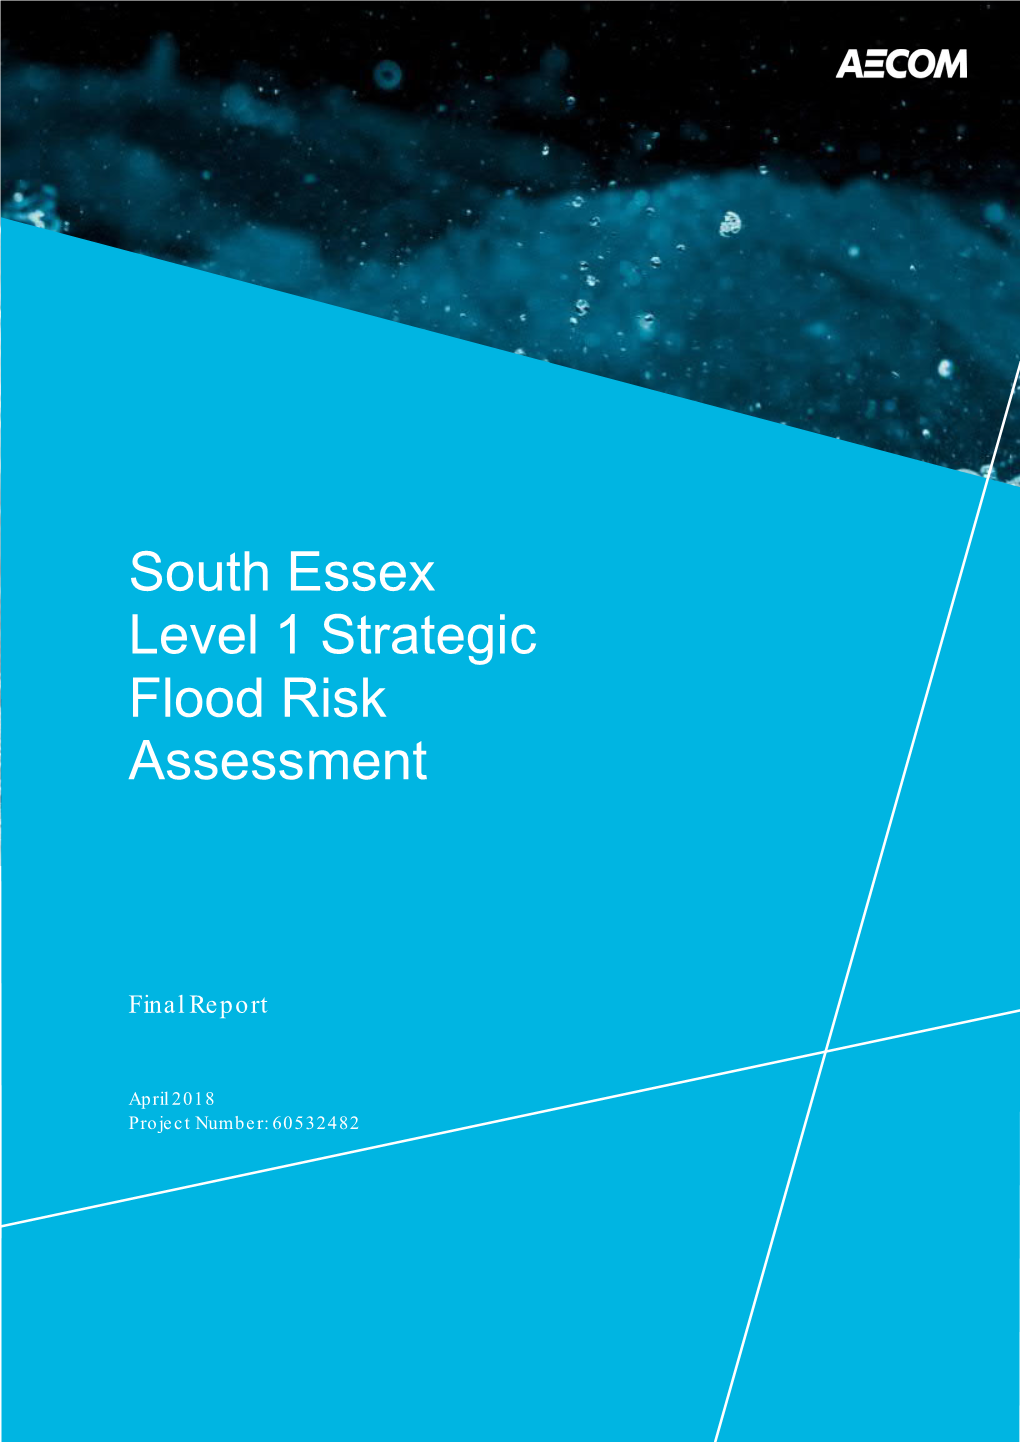 South Essex Strategic Flood Risk Assessment Level 1